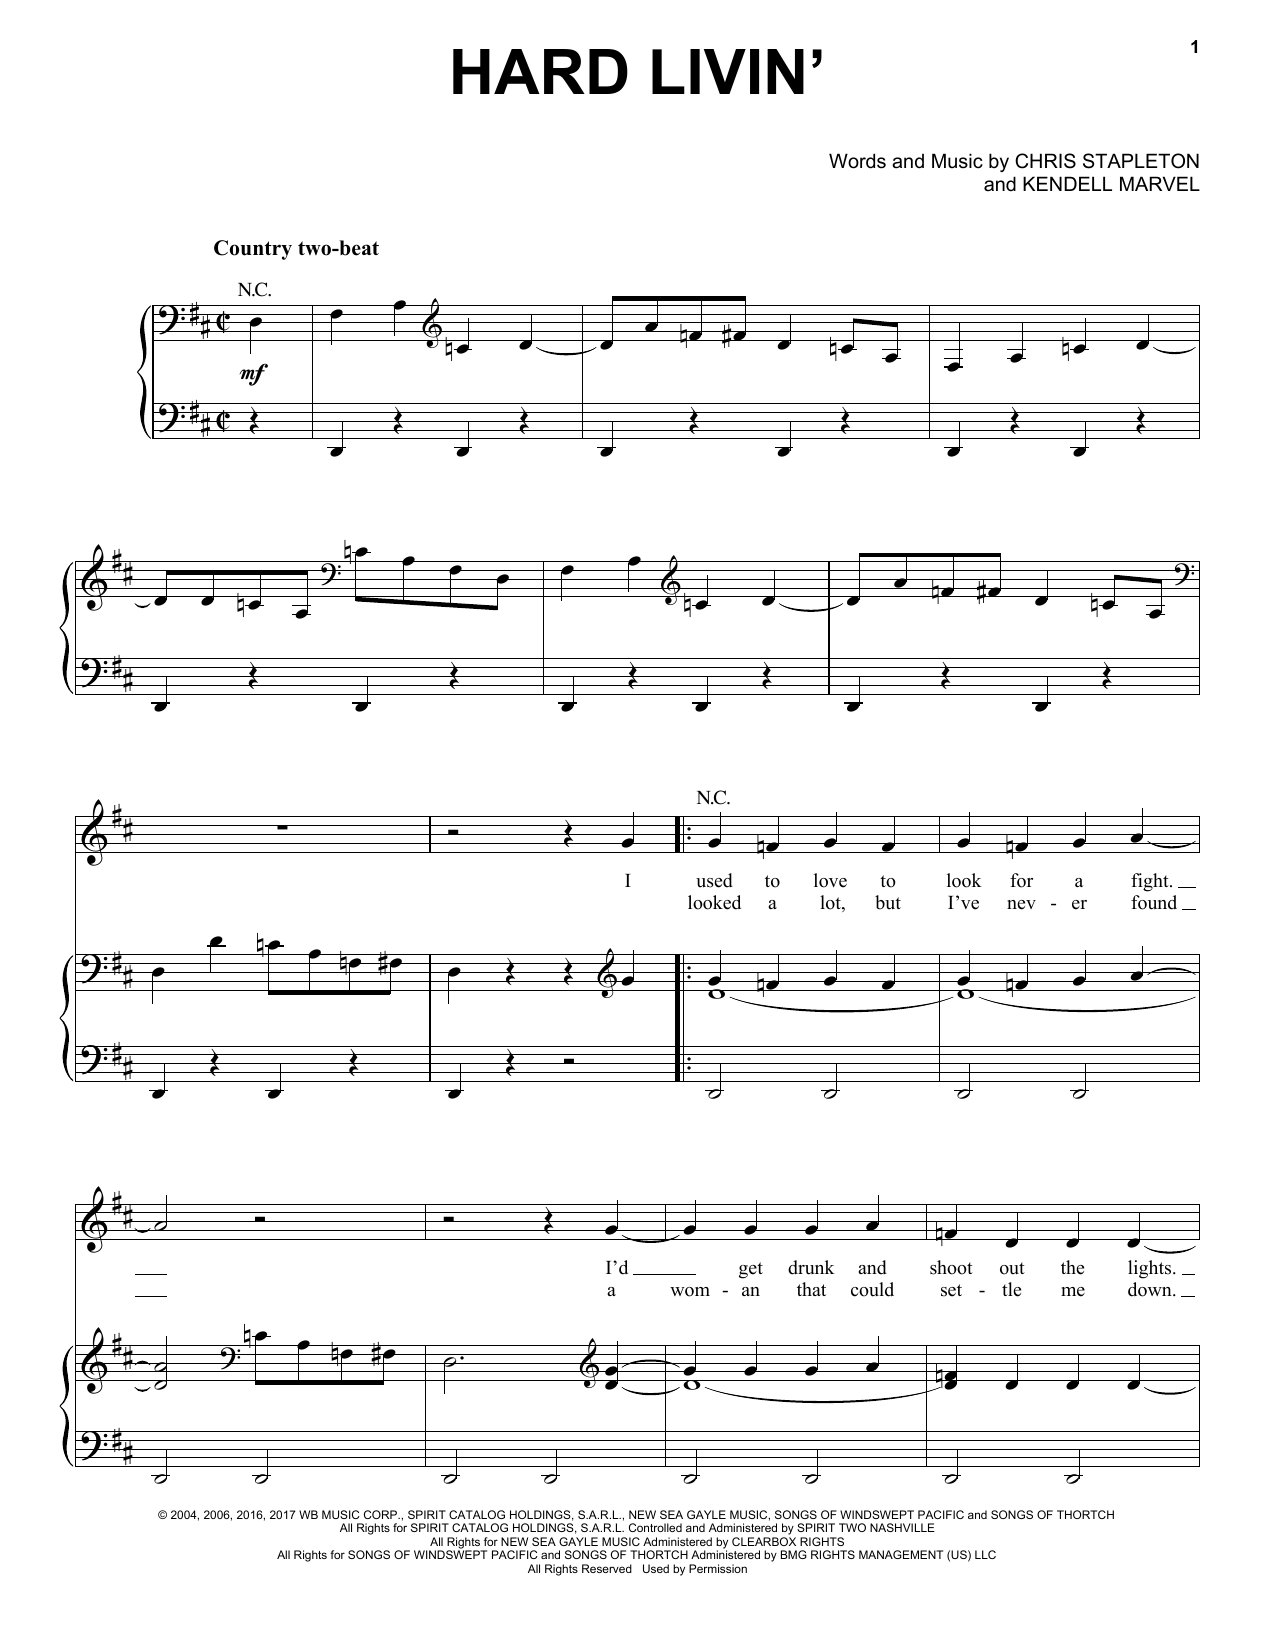 Chris Stapleton Hard Livin' Sheet Music Notes & Chords for Guitar Chords/Lyrics - Download or Print PDF